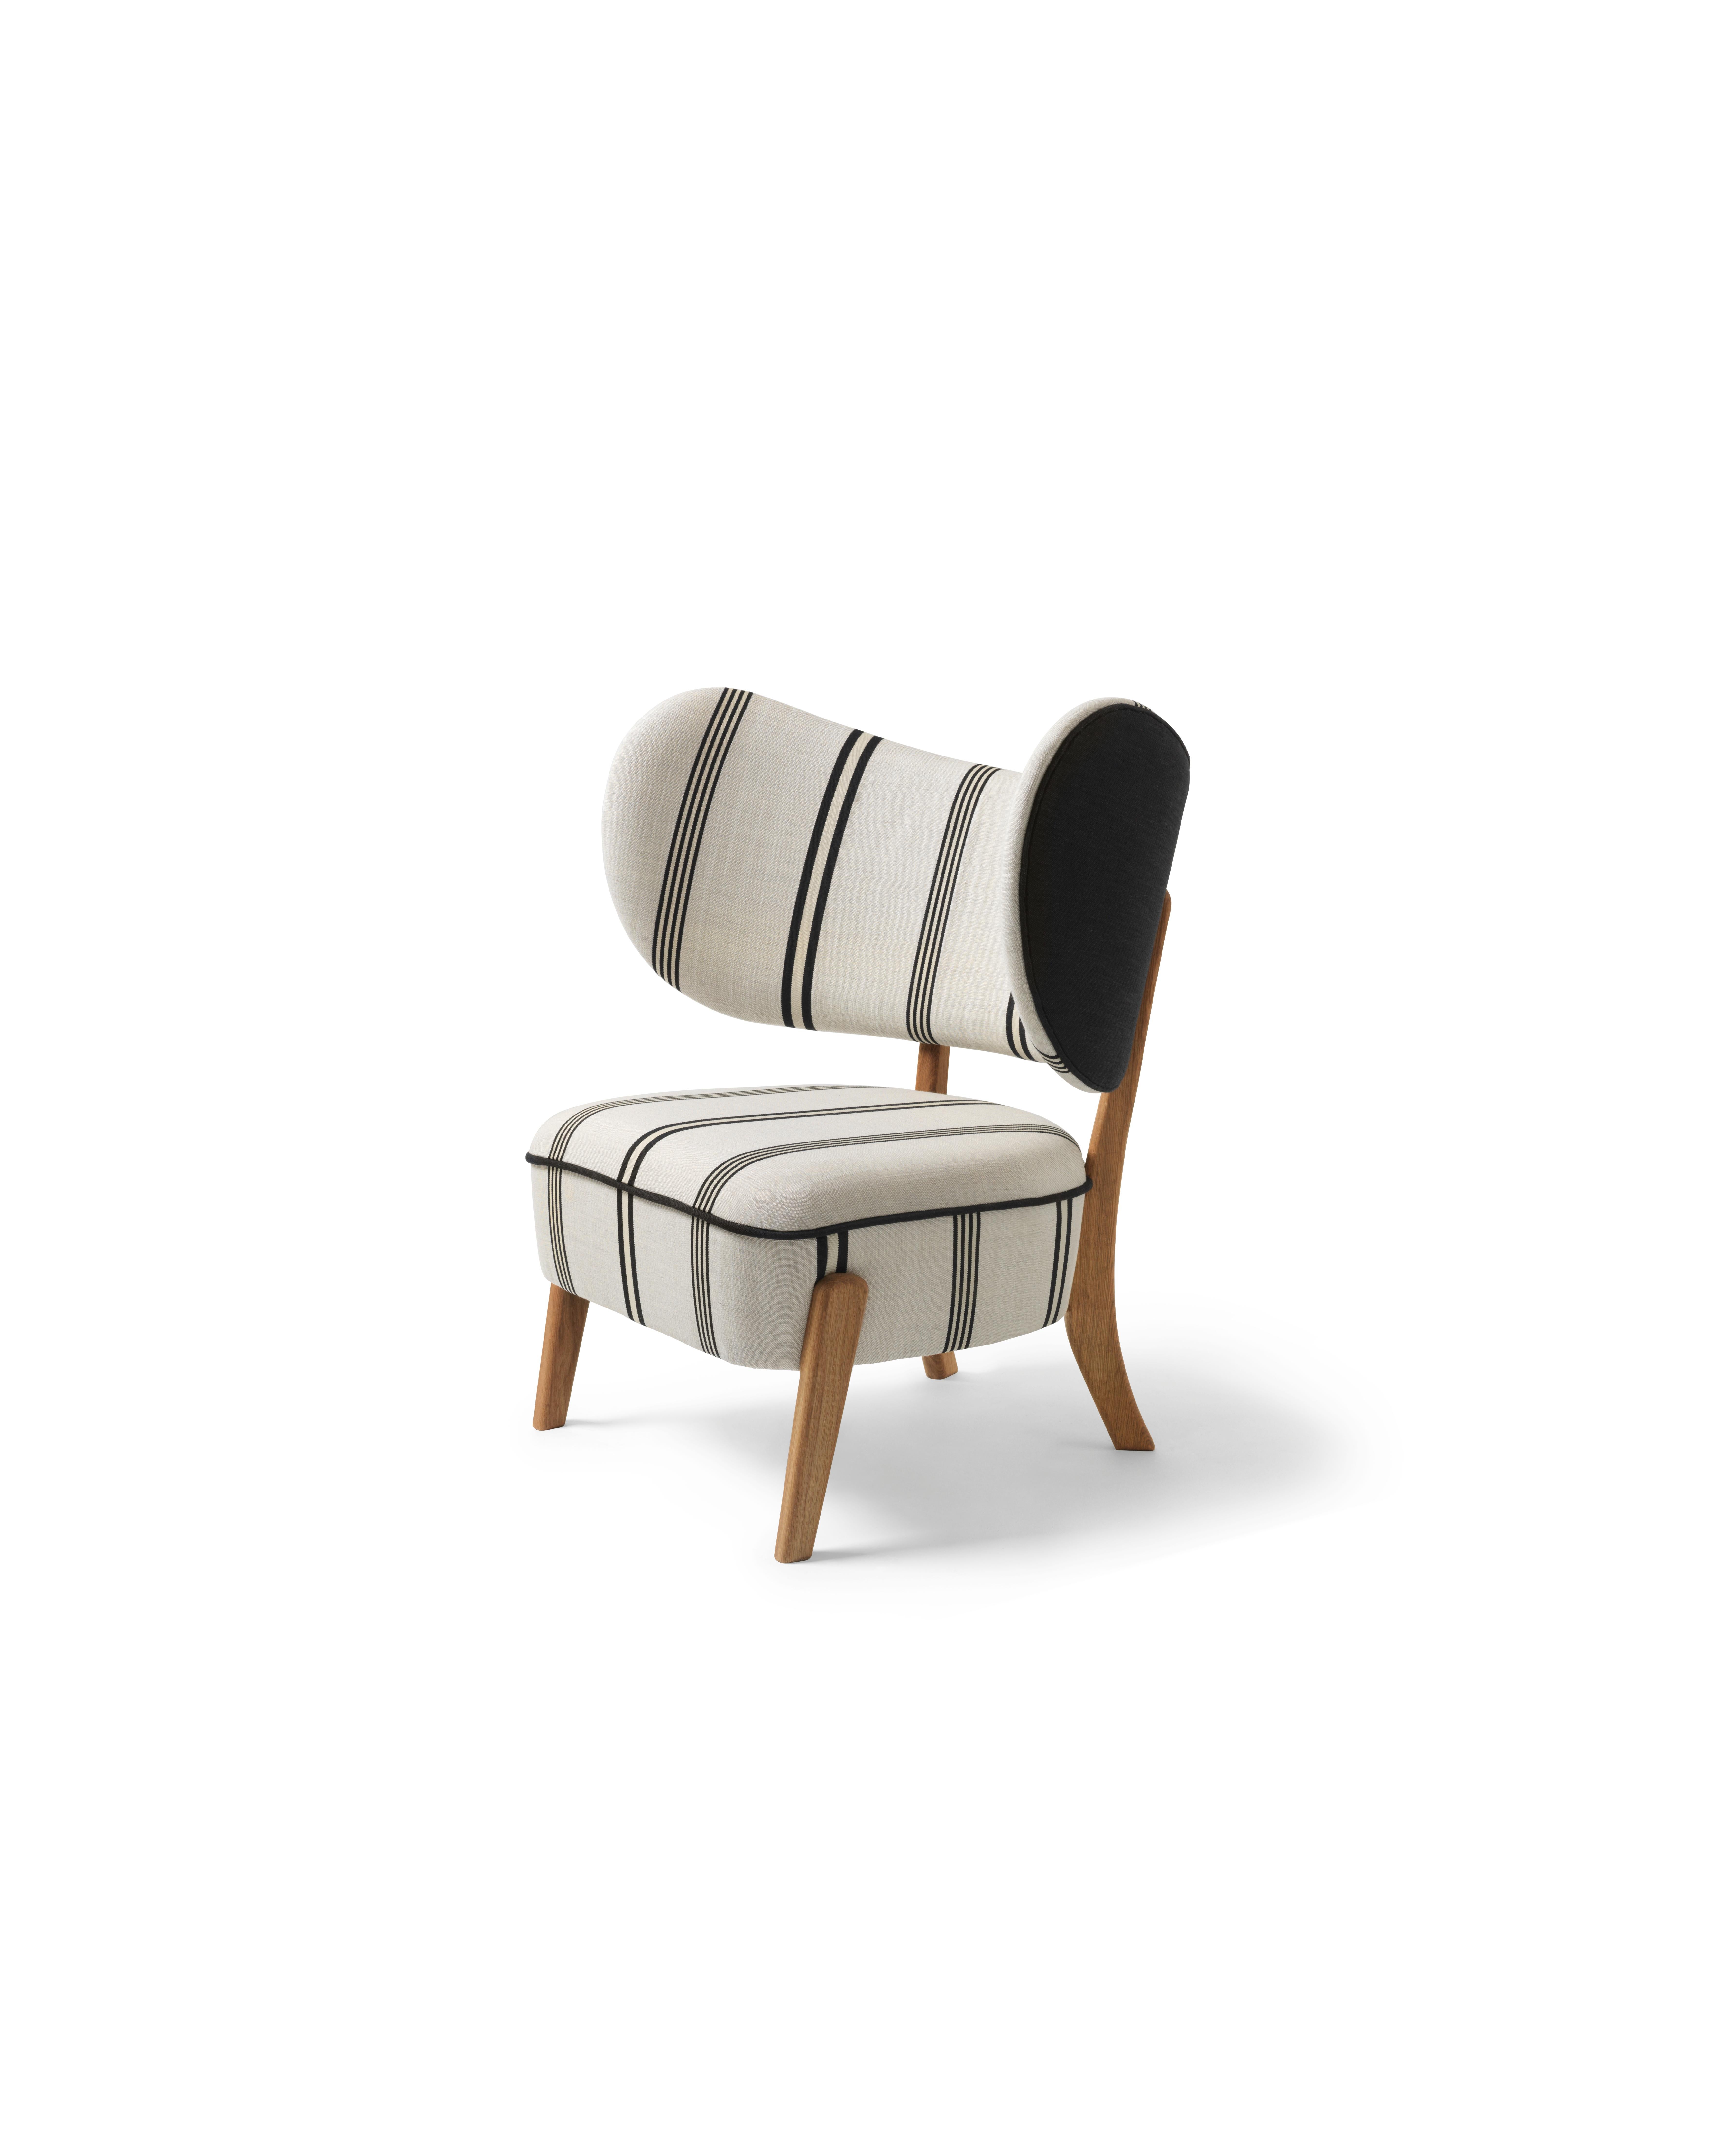 DEDAR/Linear TMBO Lounge Chair by Mazo Design
Dimensions: W 90 x D 68.5 x H 87 cm
Materials: Oak, Textile 
Also Available: ROMO/Linara, DAW/Royal, KVADRAT/Remix, KVADRAT/Hallingdal & Fiord, BUTE/Storr, DEDAR/Linear,
DAW/Mohair & Mcnutt,